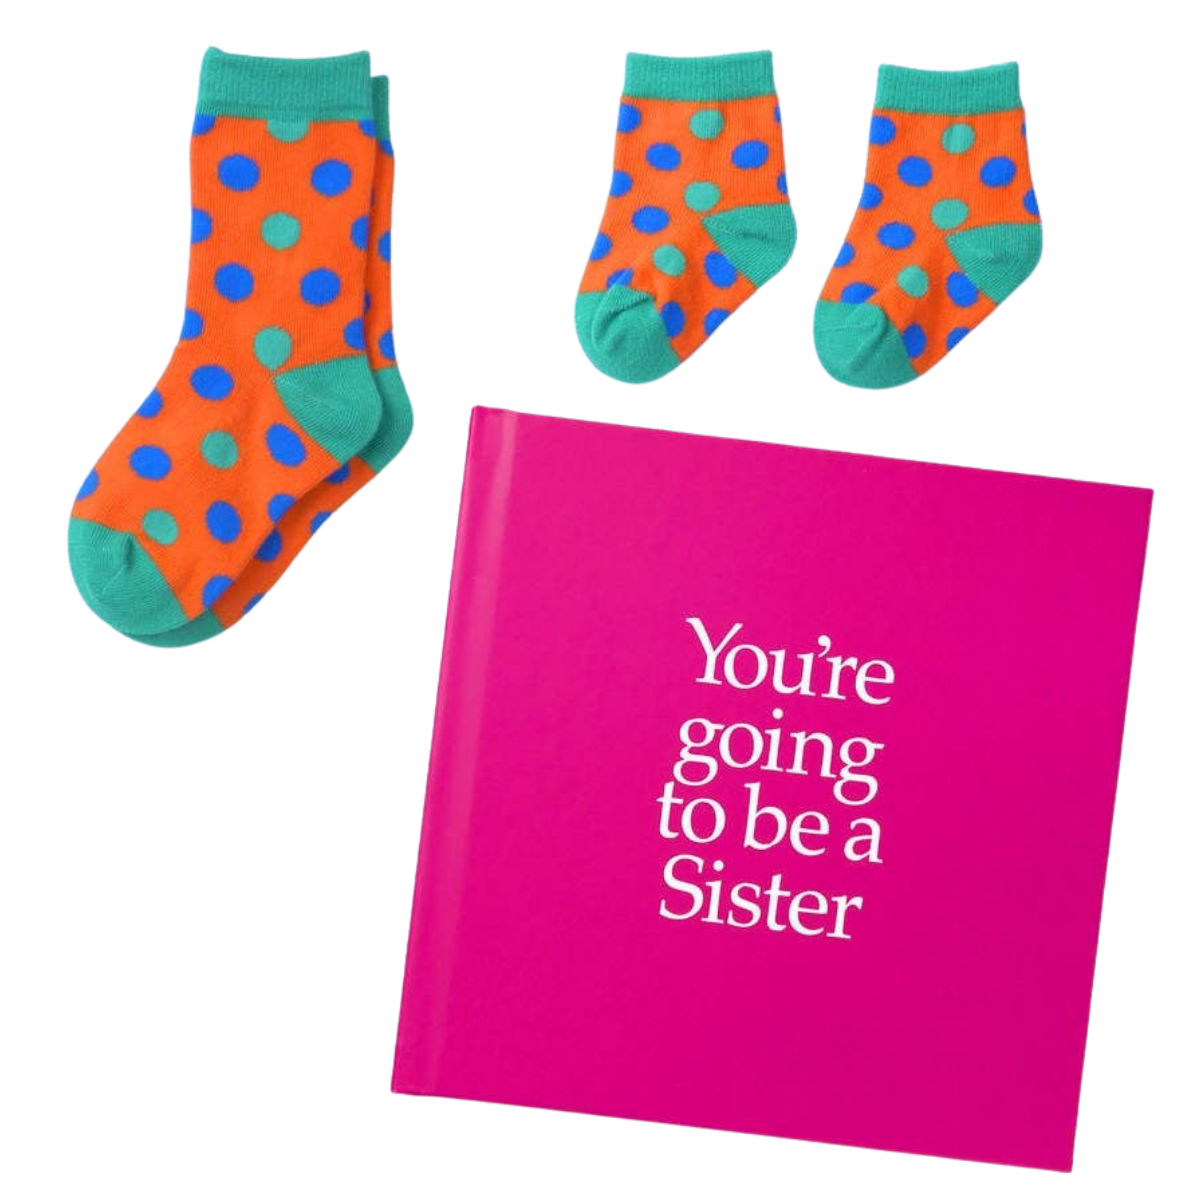 New Sibling Book & Socks Gift Set